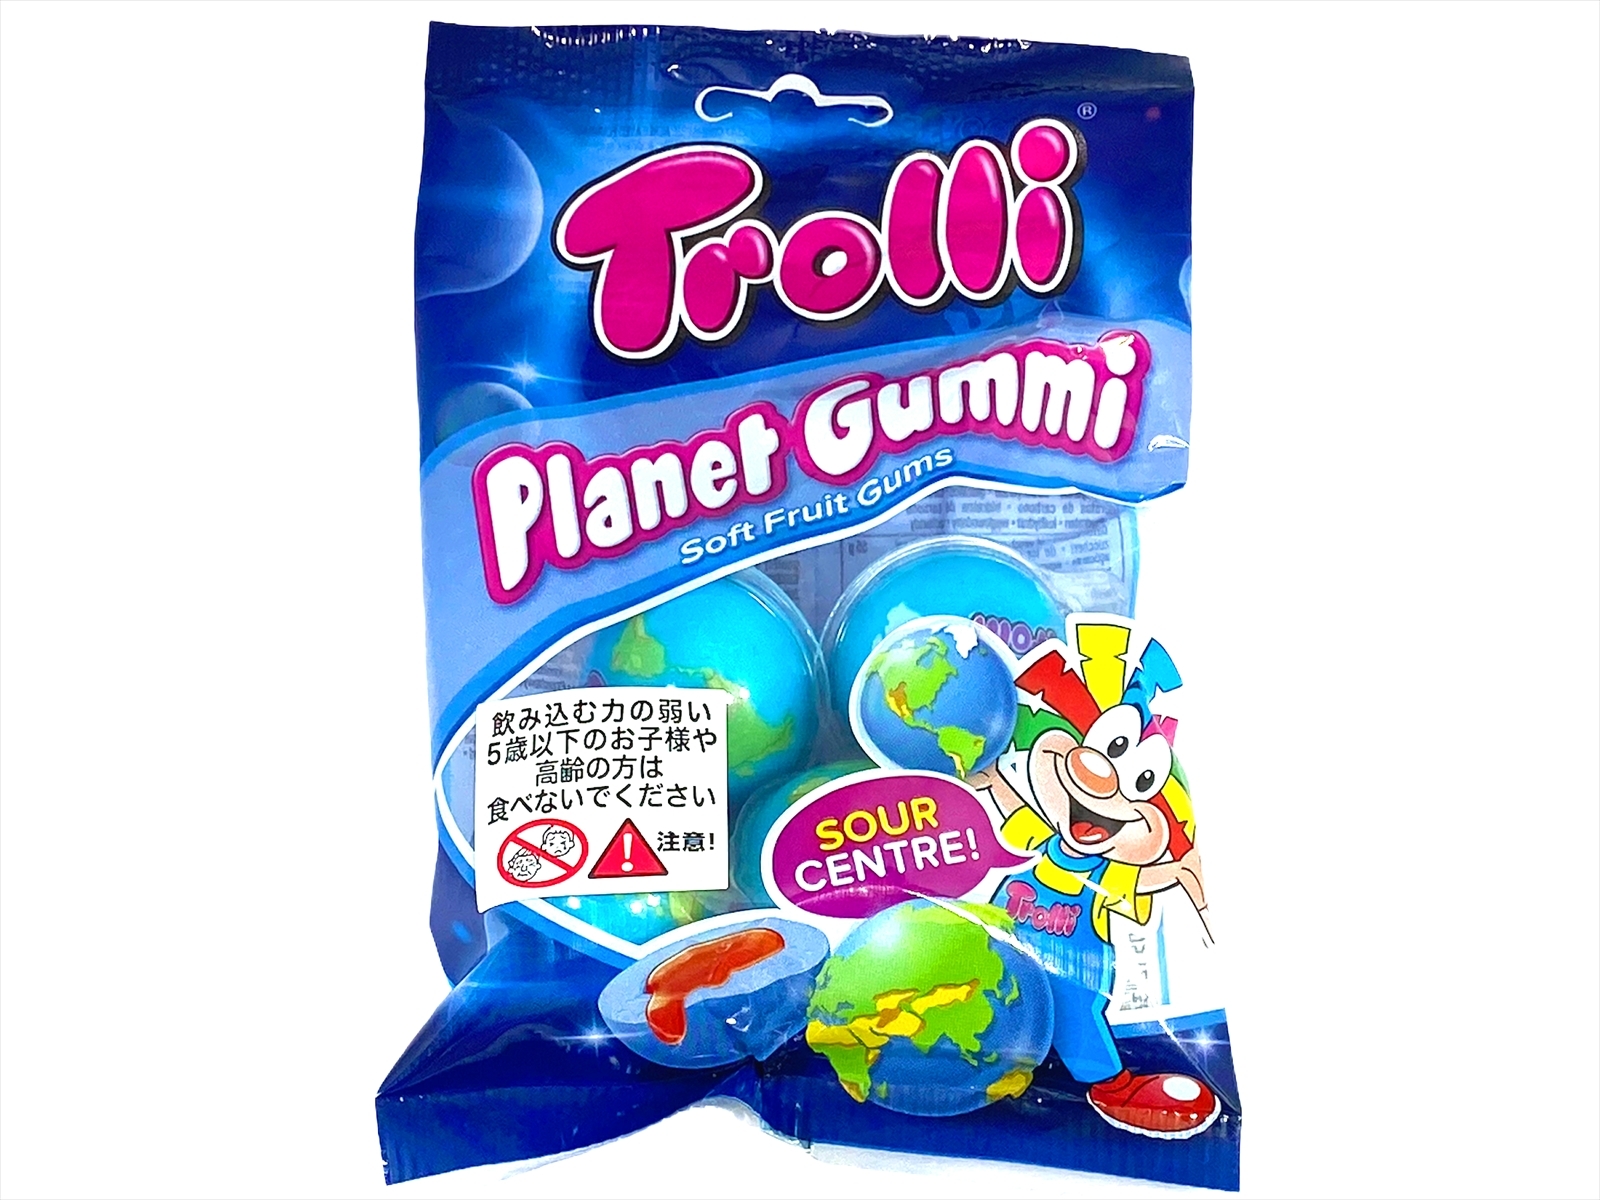 Trolli Planet Gummi Soft Fruit Gums. 日本に輸入されるのはスペインバージョン。